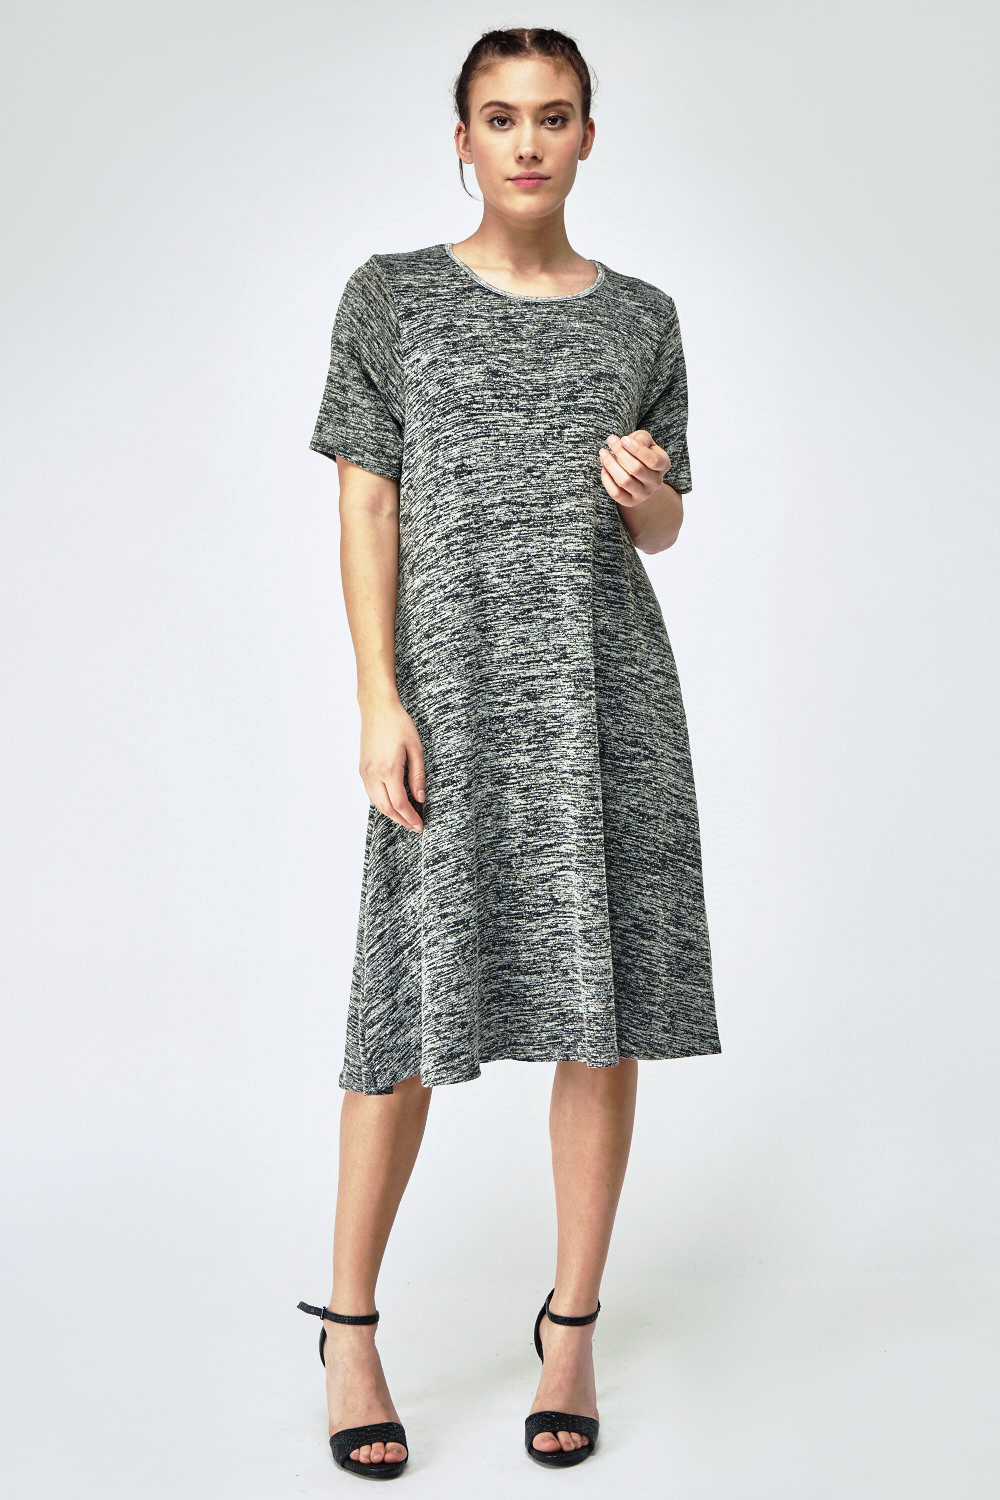 Charcoal/Grey Speckled Midi Dress - Just $6